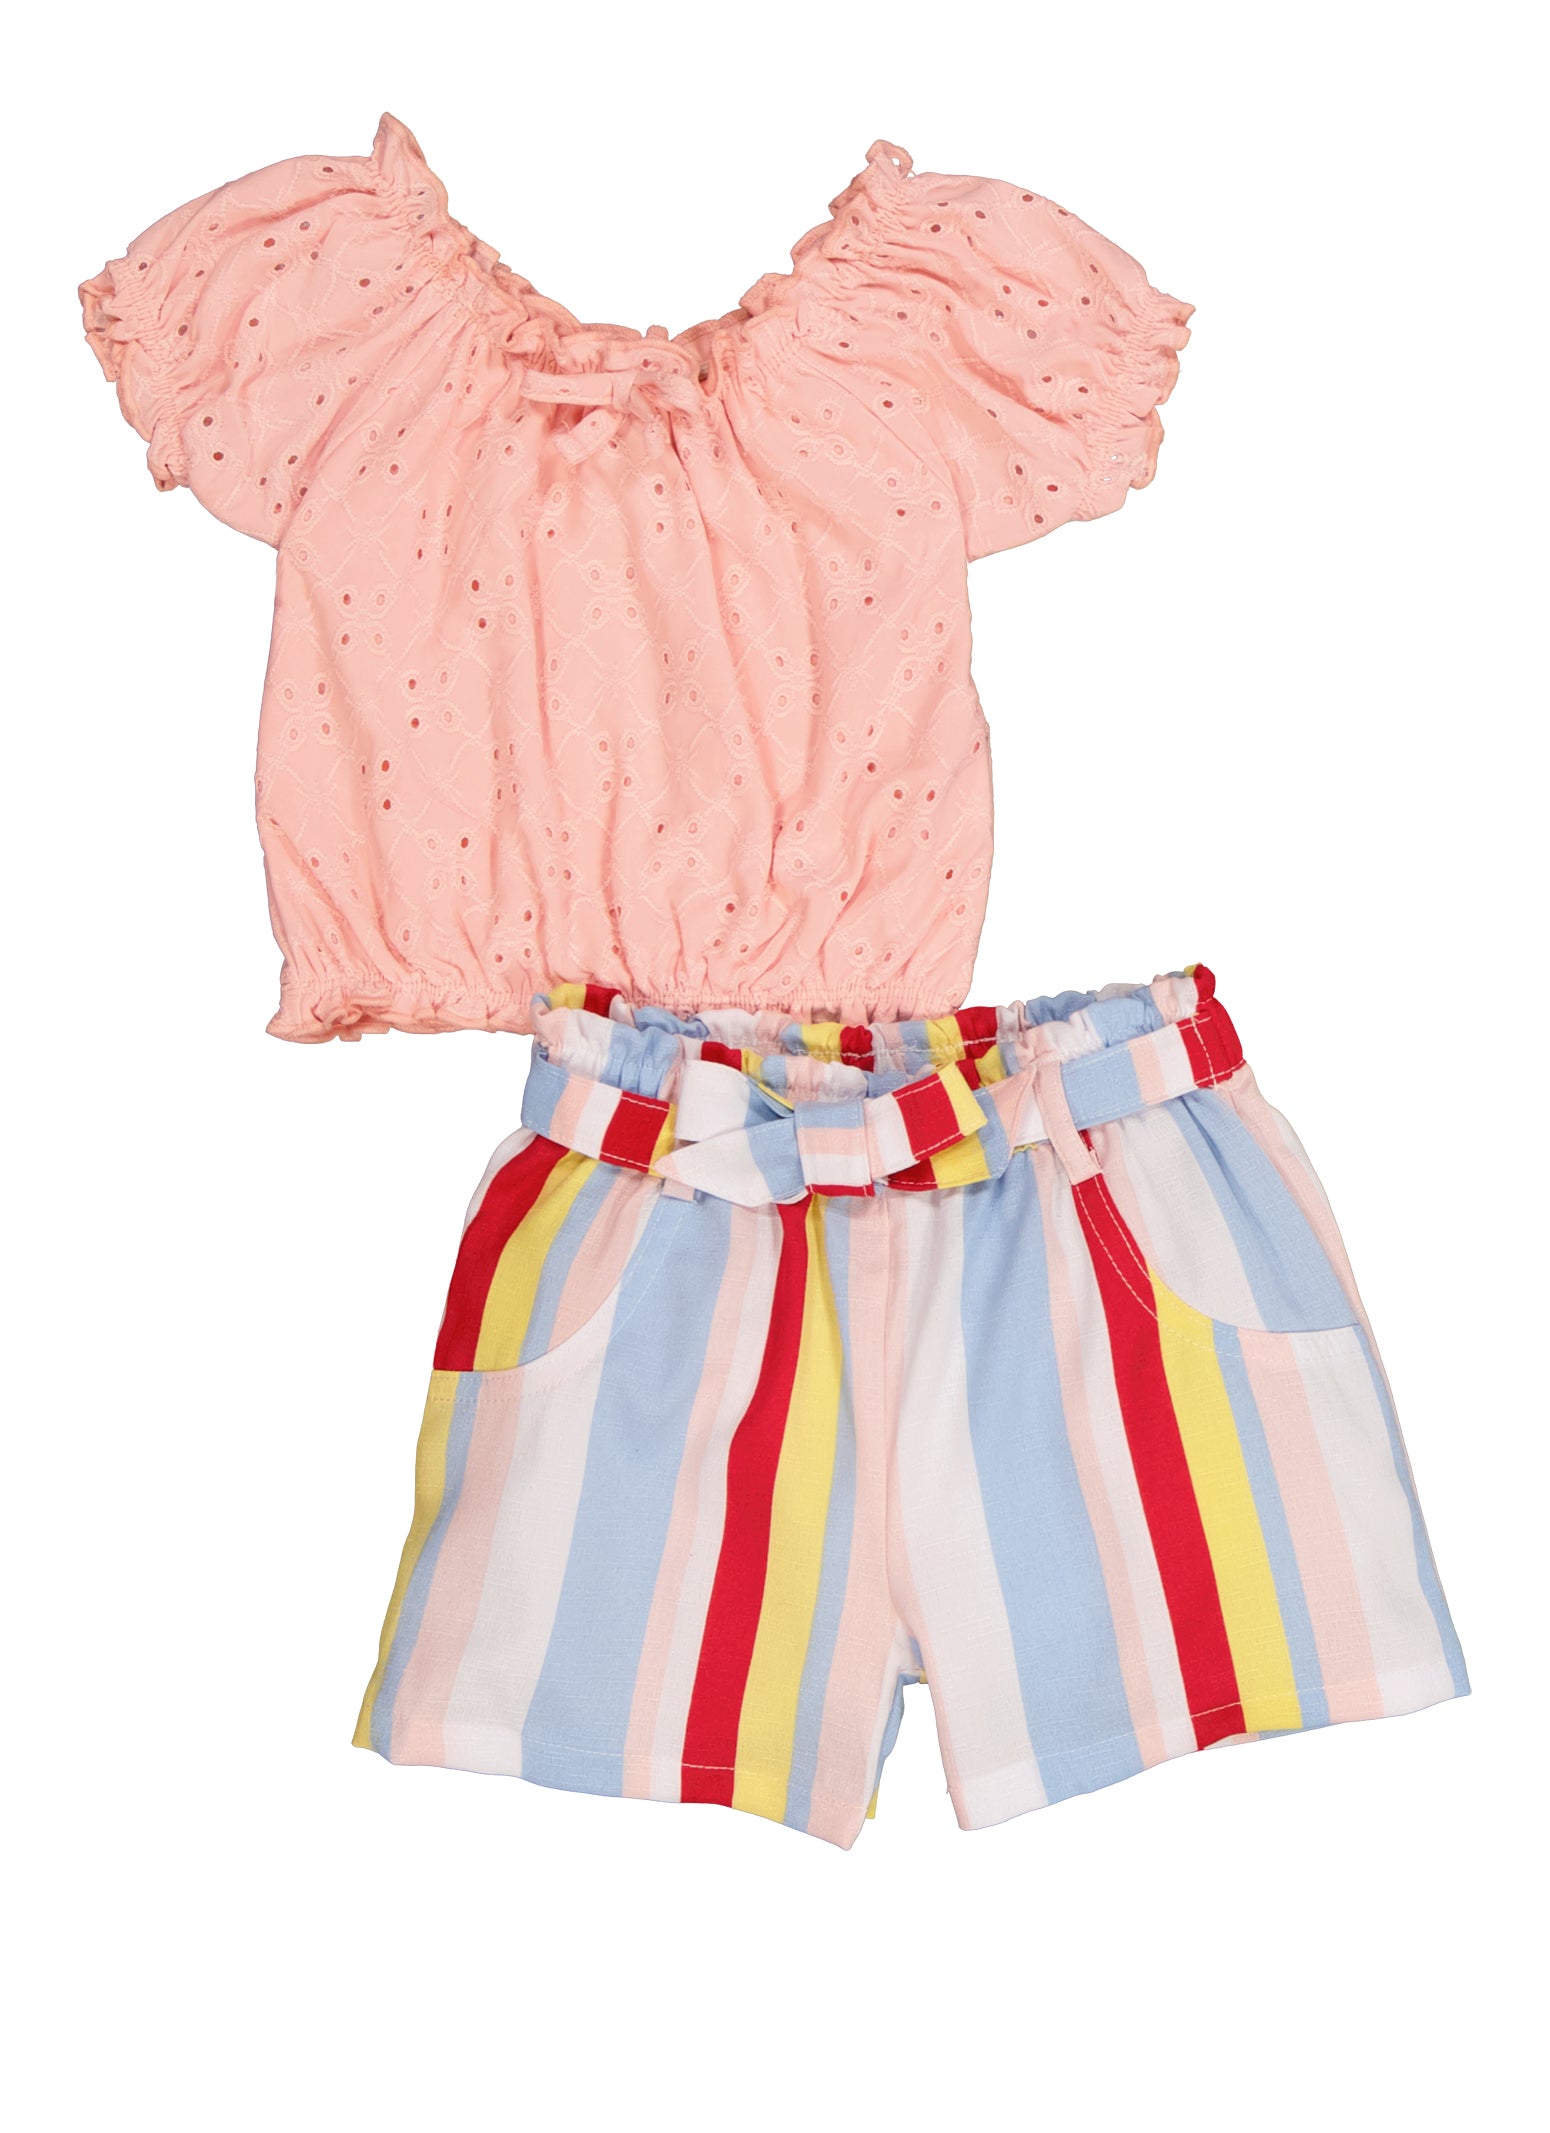 Toddler Girls Eyelet Peasant Top and Striped Shorts